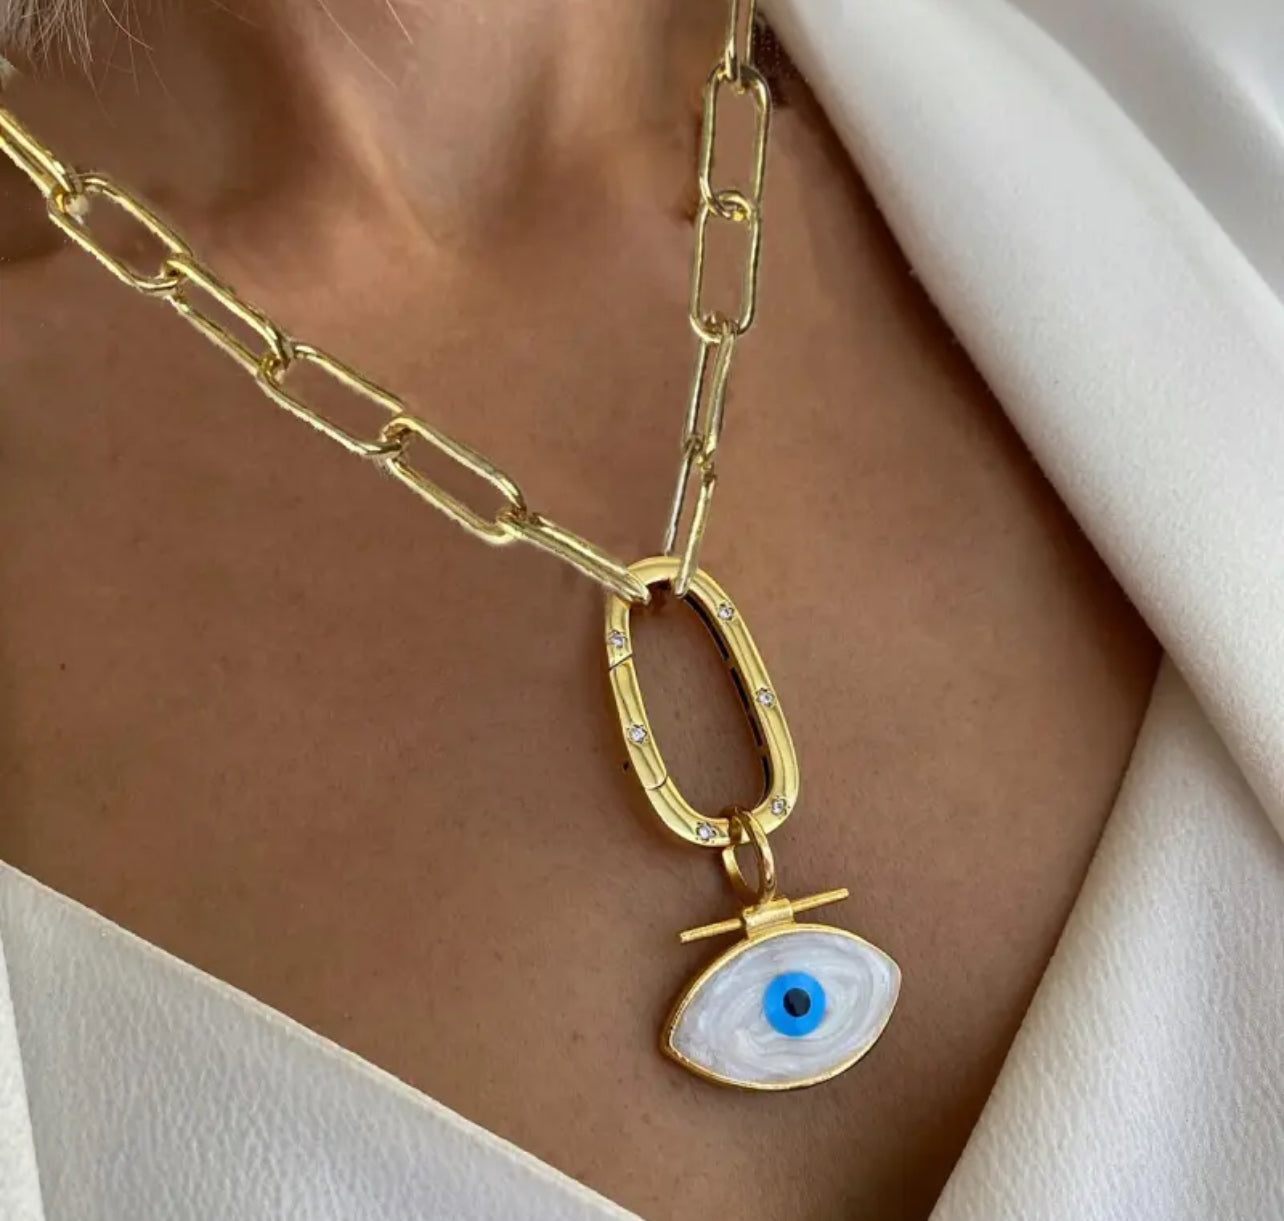 Evil eye necklace instagram